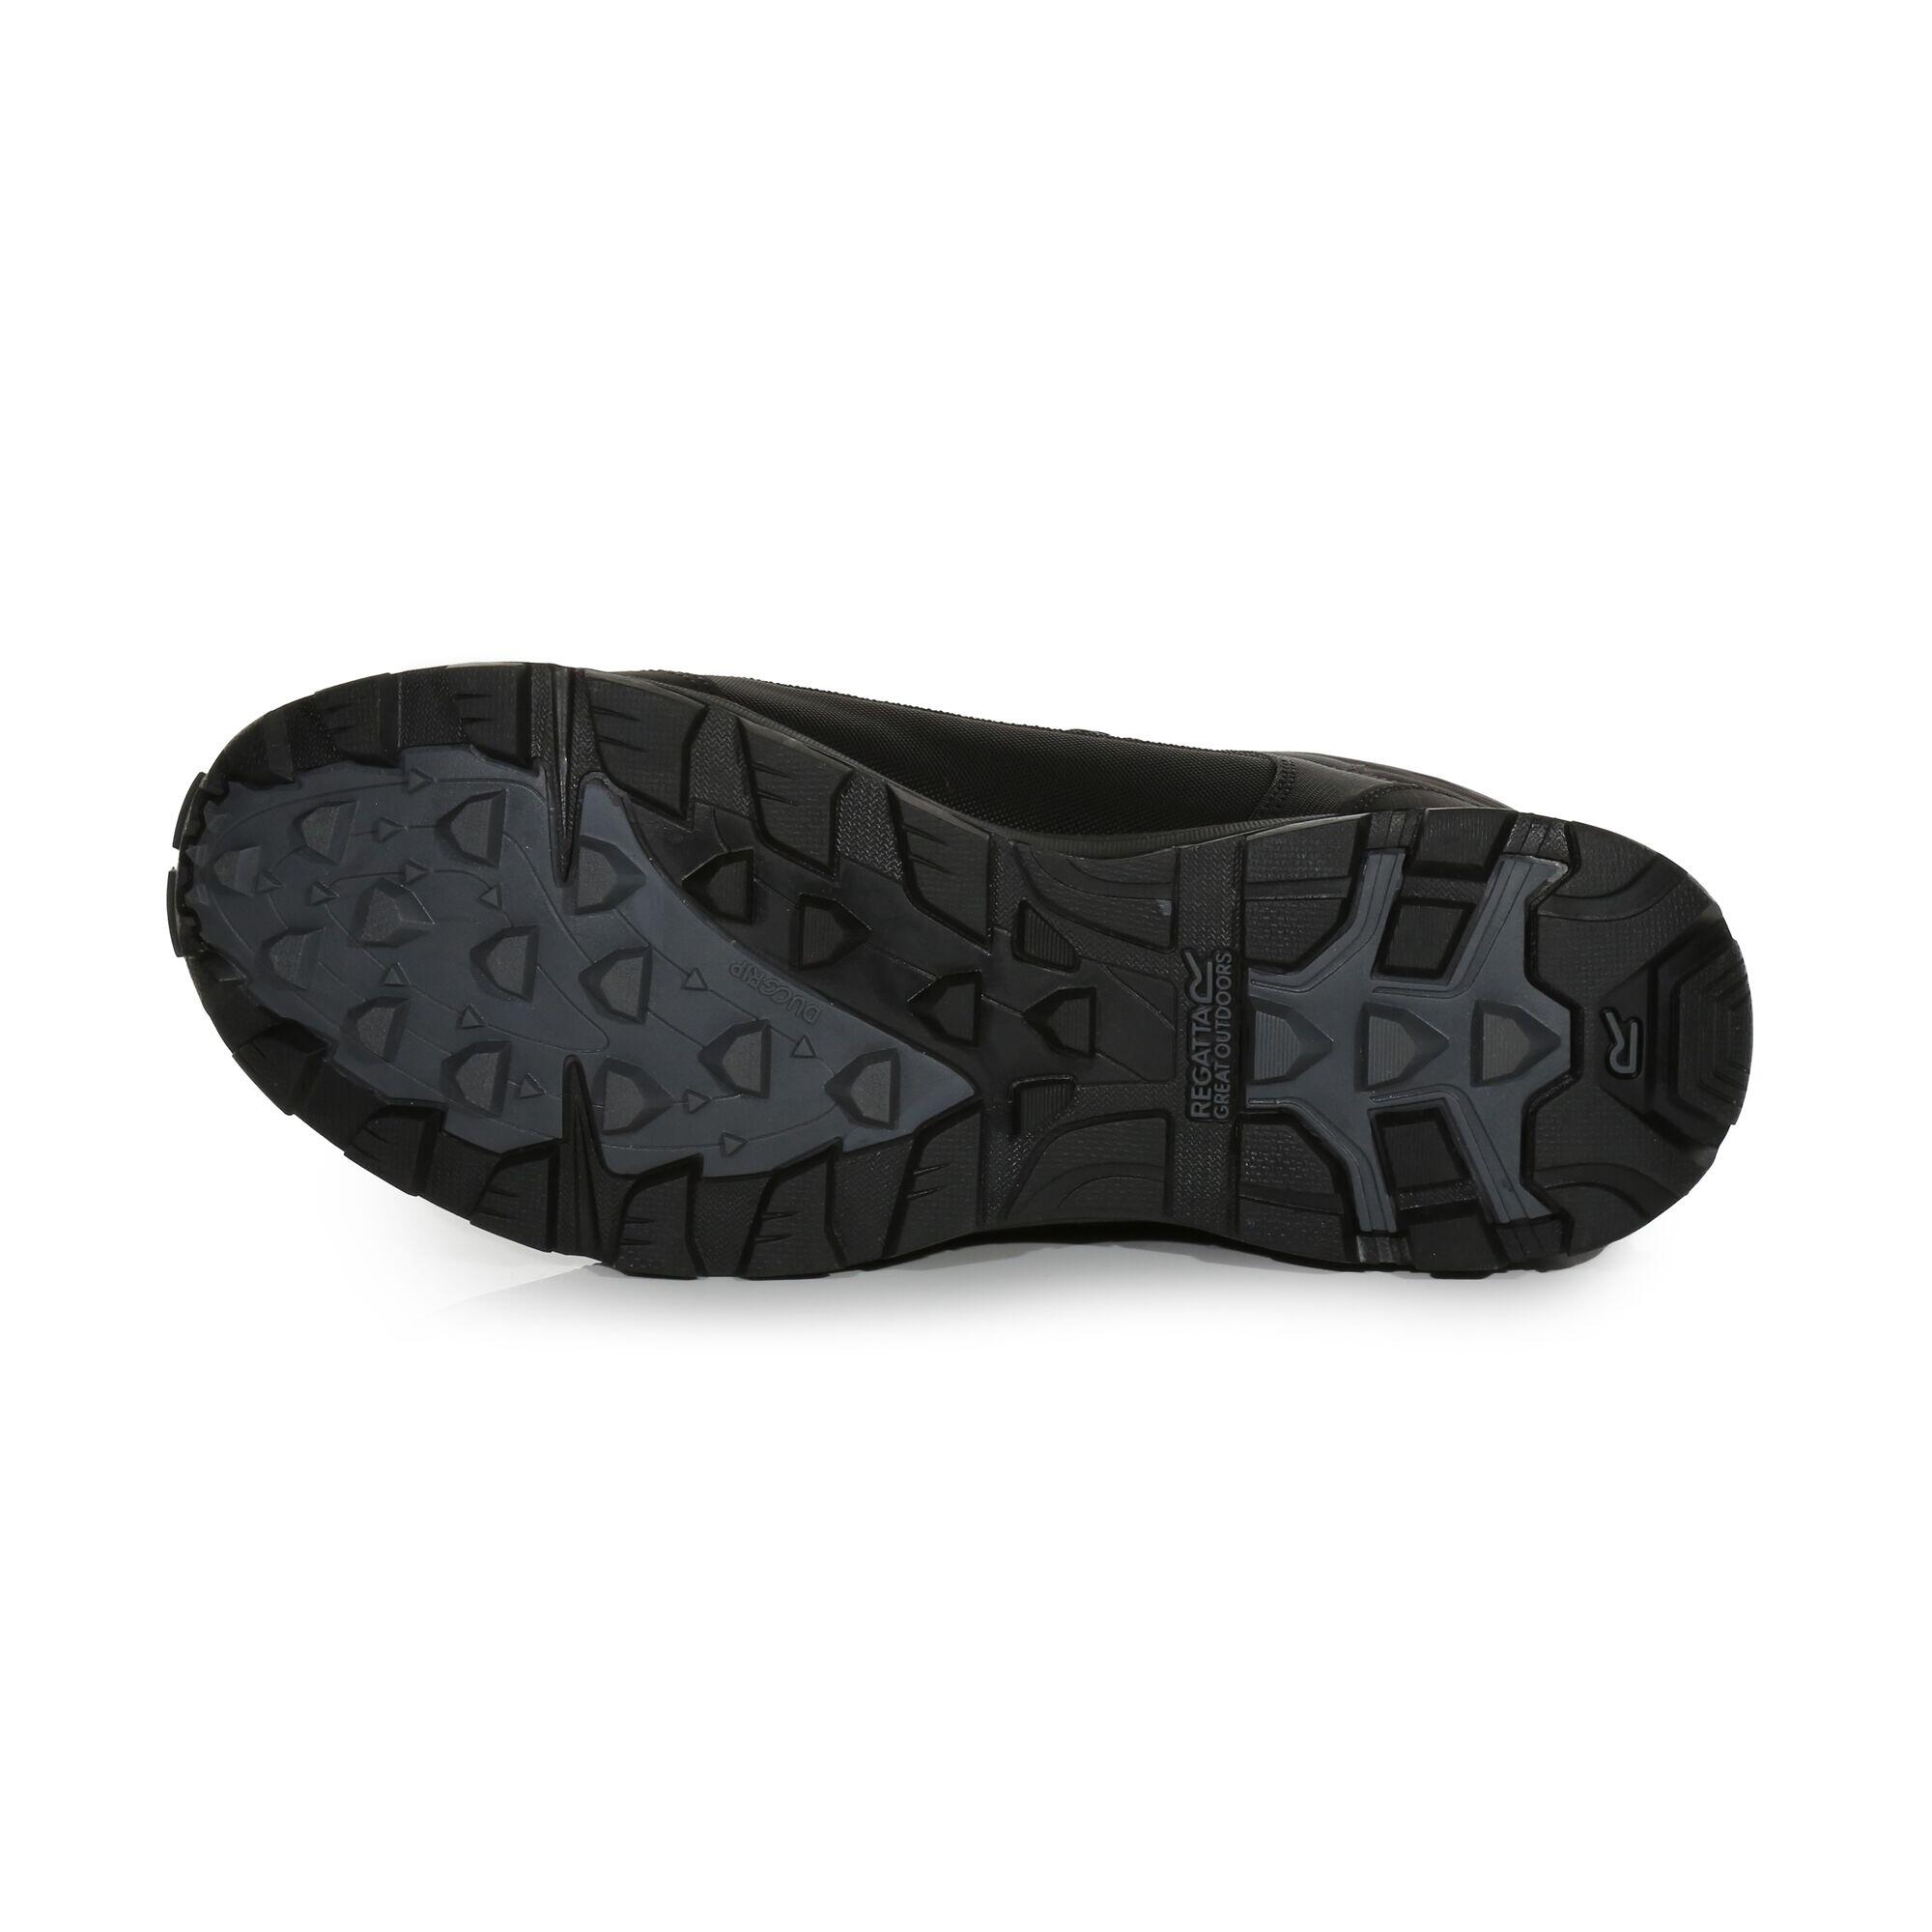 Samaris Men's Hiking Thermo Insulation Boots - Black 4/5